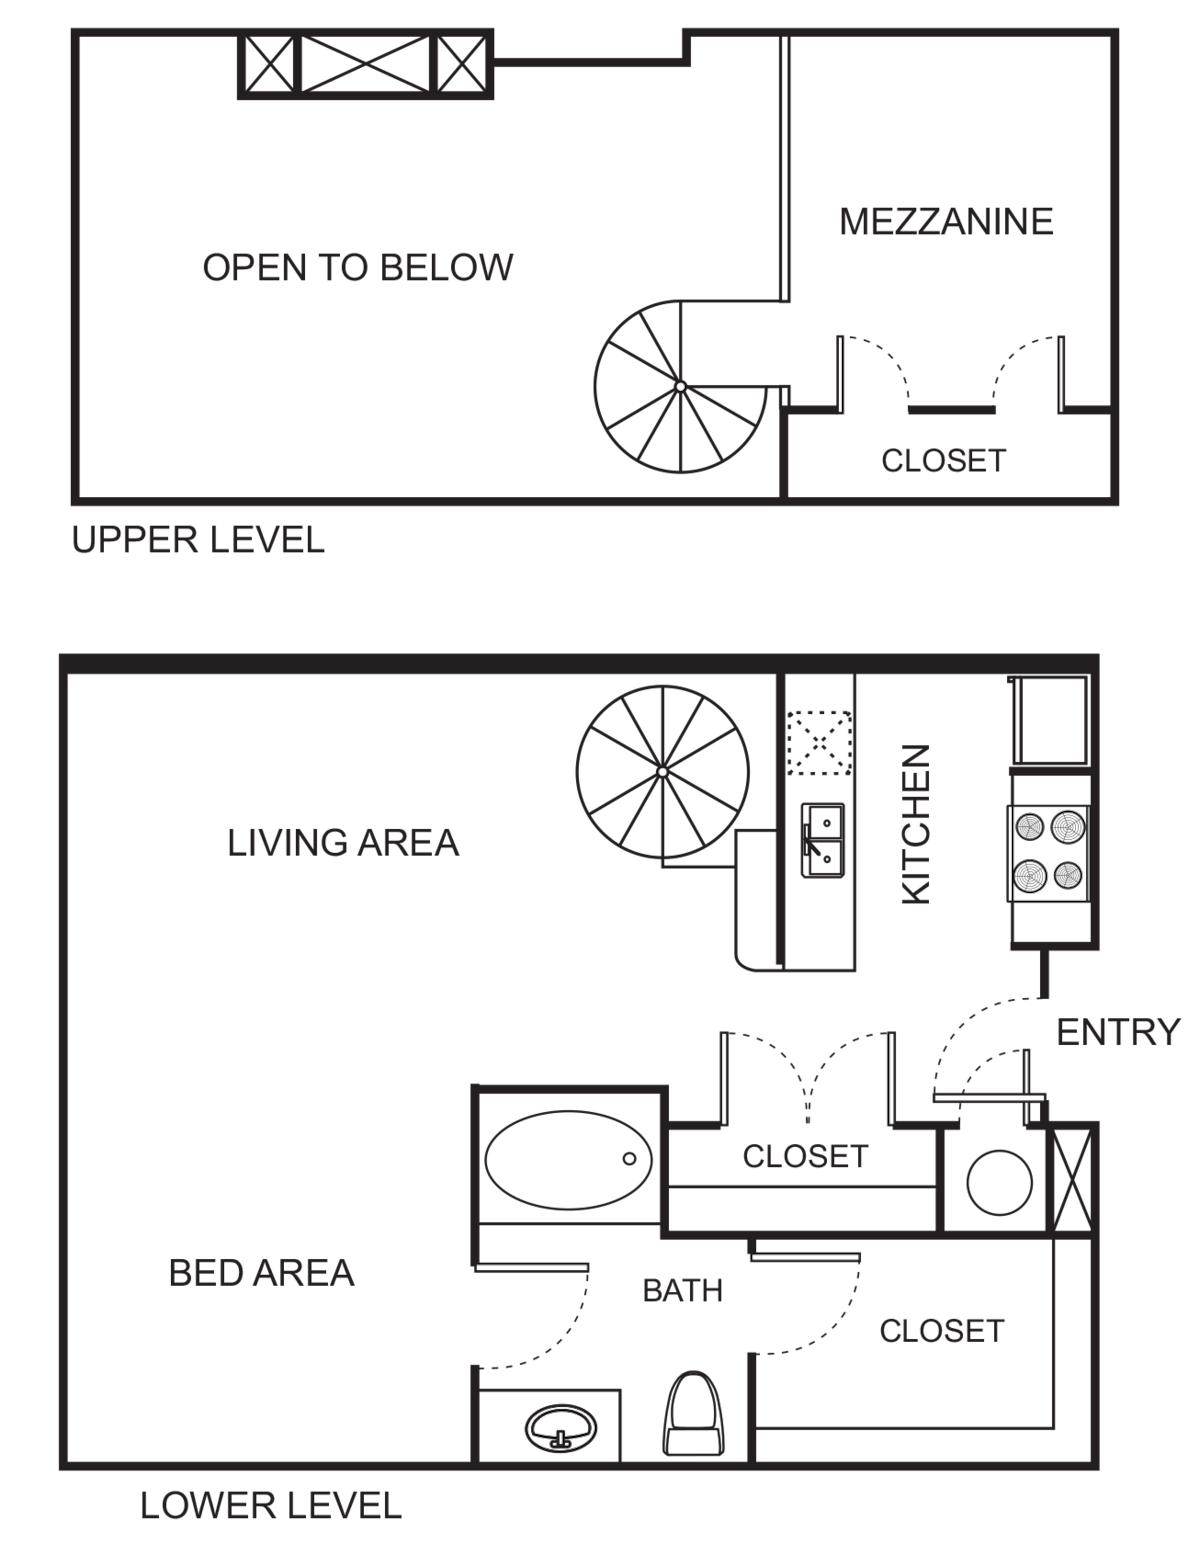 Floorplan diagram for S8-AB Studio Loft, showing Studio